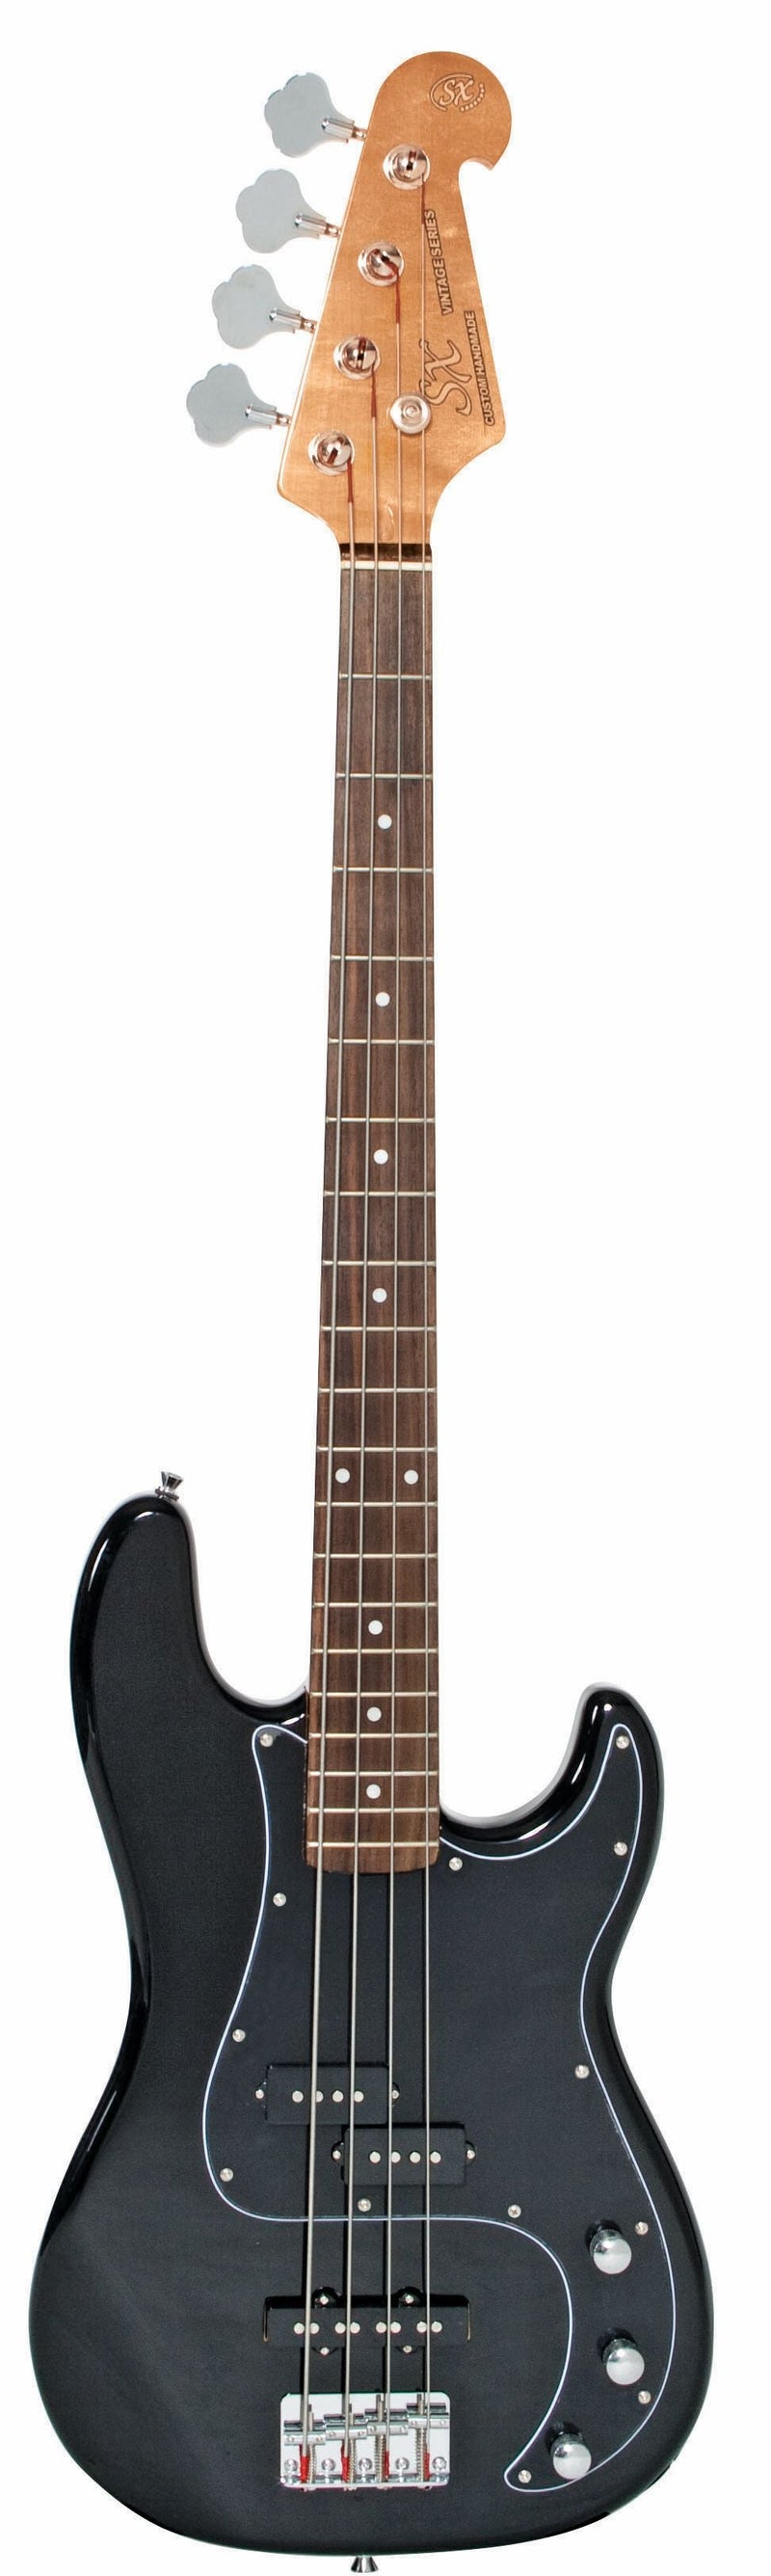 SX VEP62B P&J Vintage Style Bass Guitar w/Bag (Black)